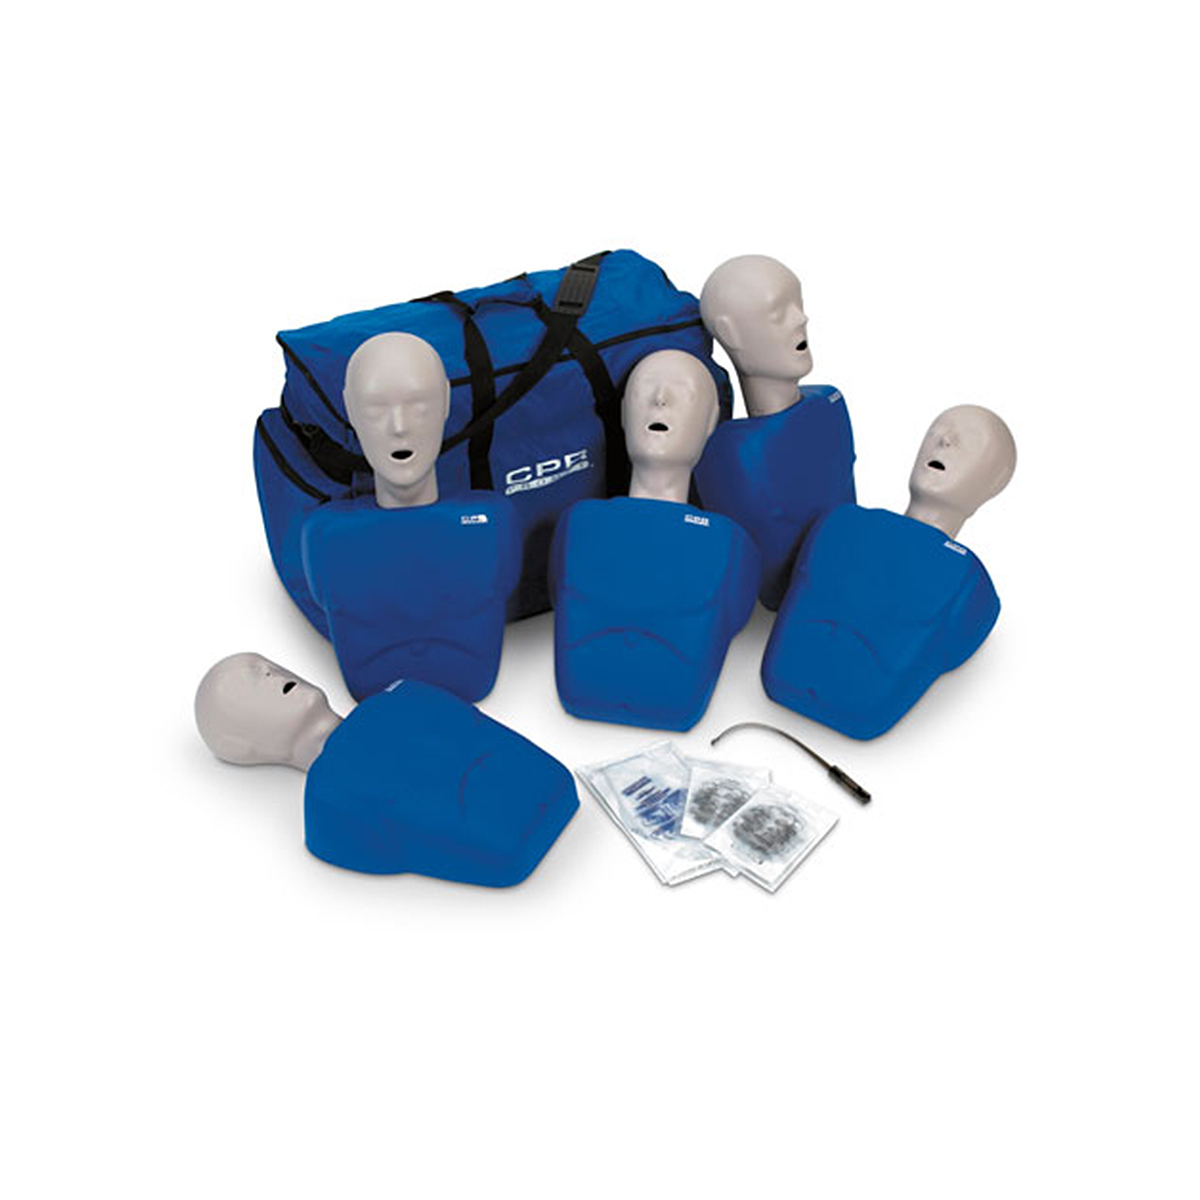 CPR Prompt Training Erwachsener/Kind 5er Pack, Bestellnummer 1017940, W44712, LF06100U, Nasco Life/form